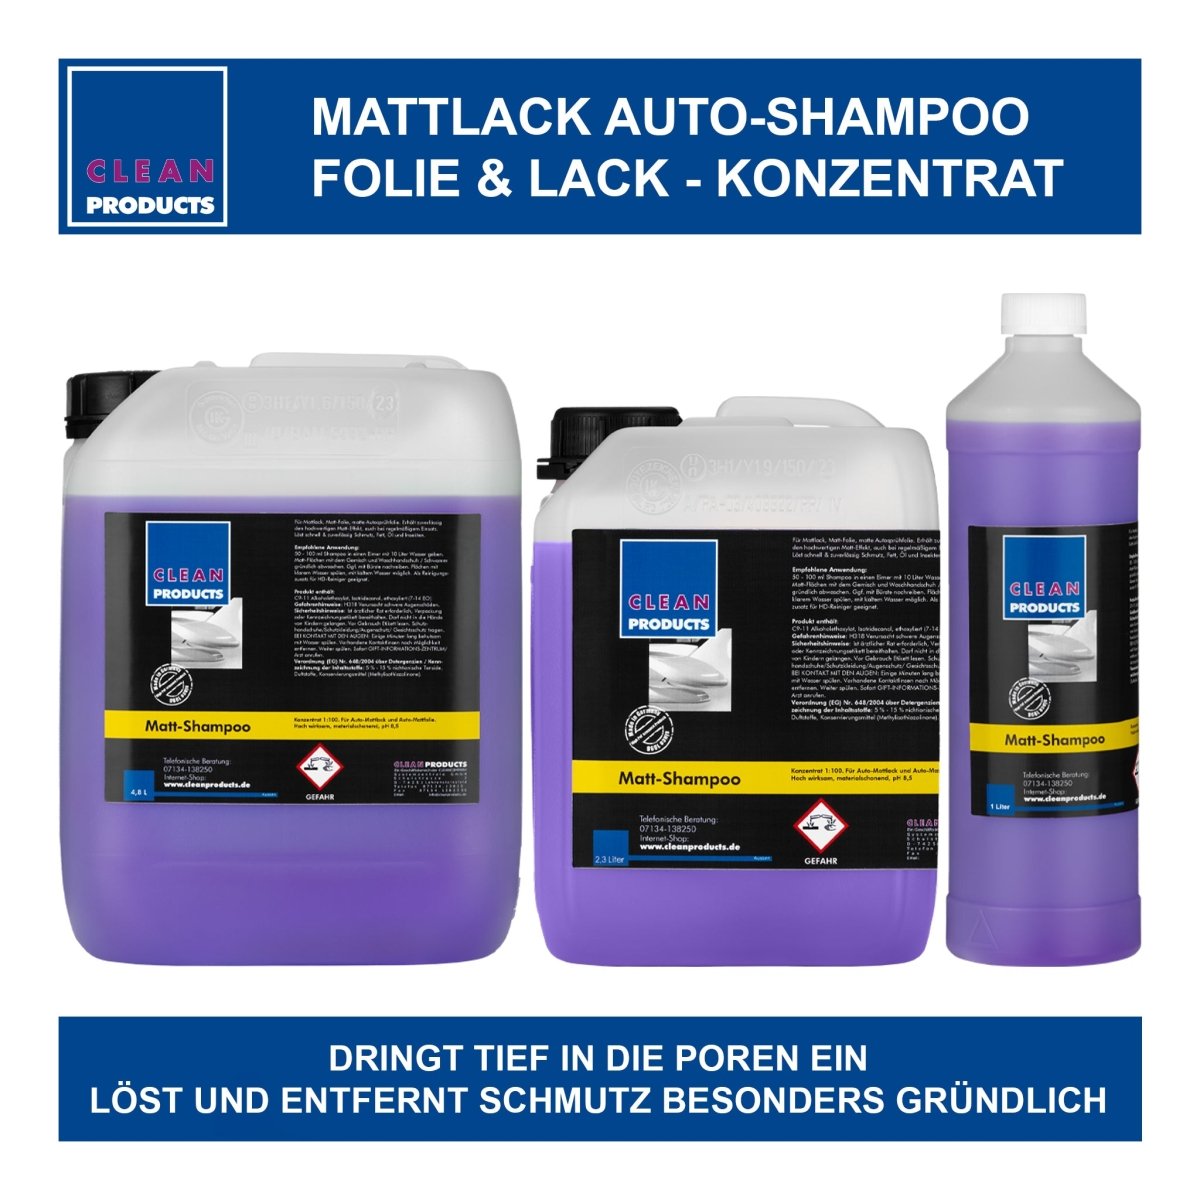 Mattlack Auto-Shampoo Folie & Lack - Konzentrat - 4,8 Liter - CLEANPRODUCTS